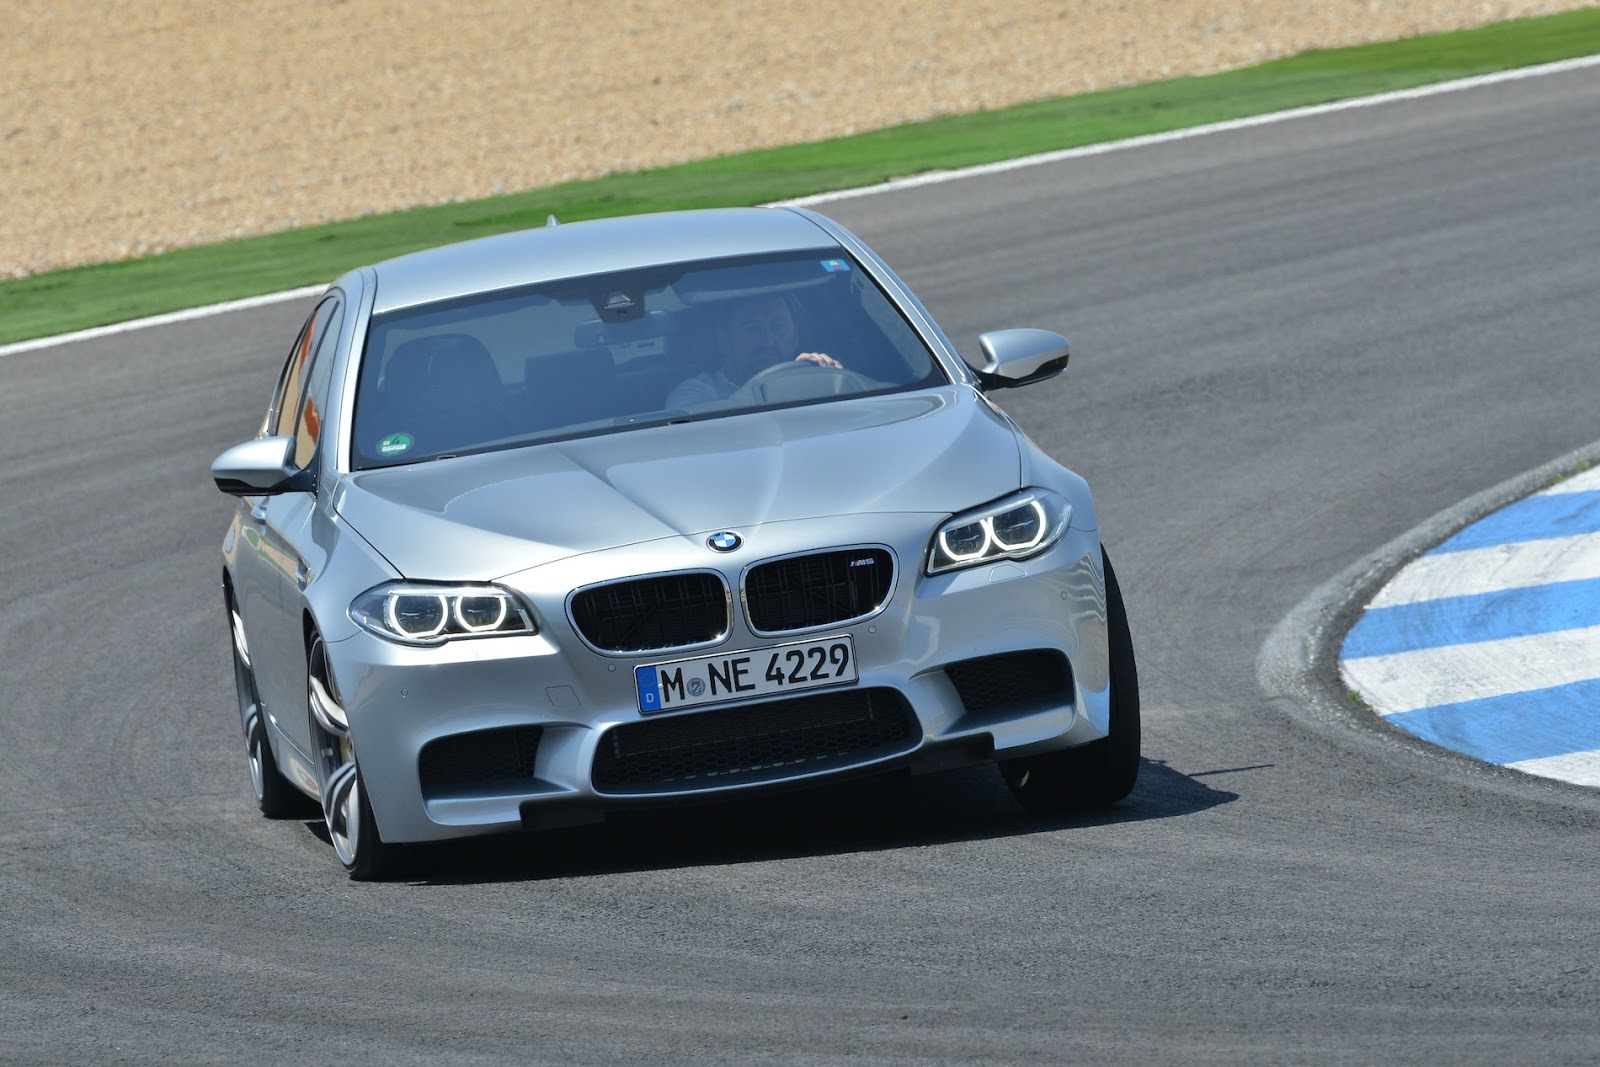 Town+Country BMW | MINI Markham Blog: 2014 BMW M5 LCI and BMW M6 ...